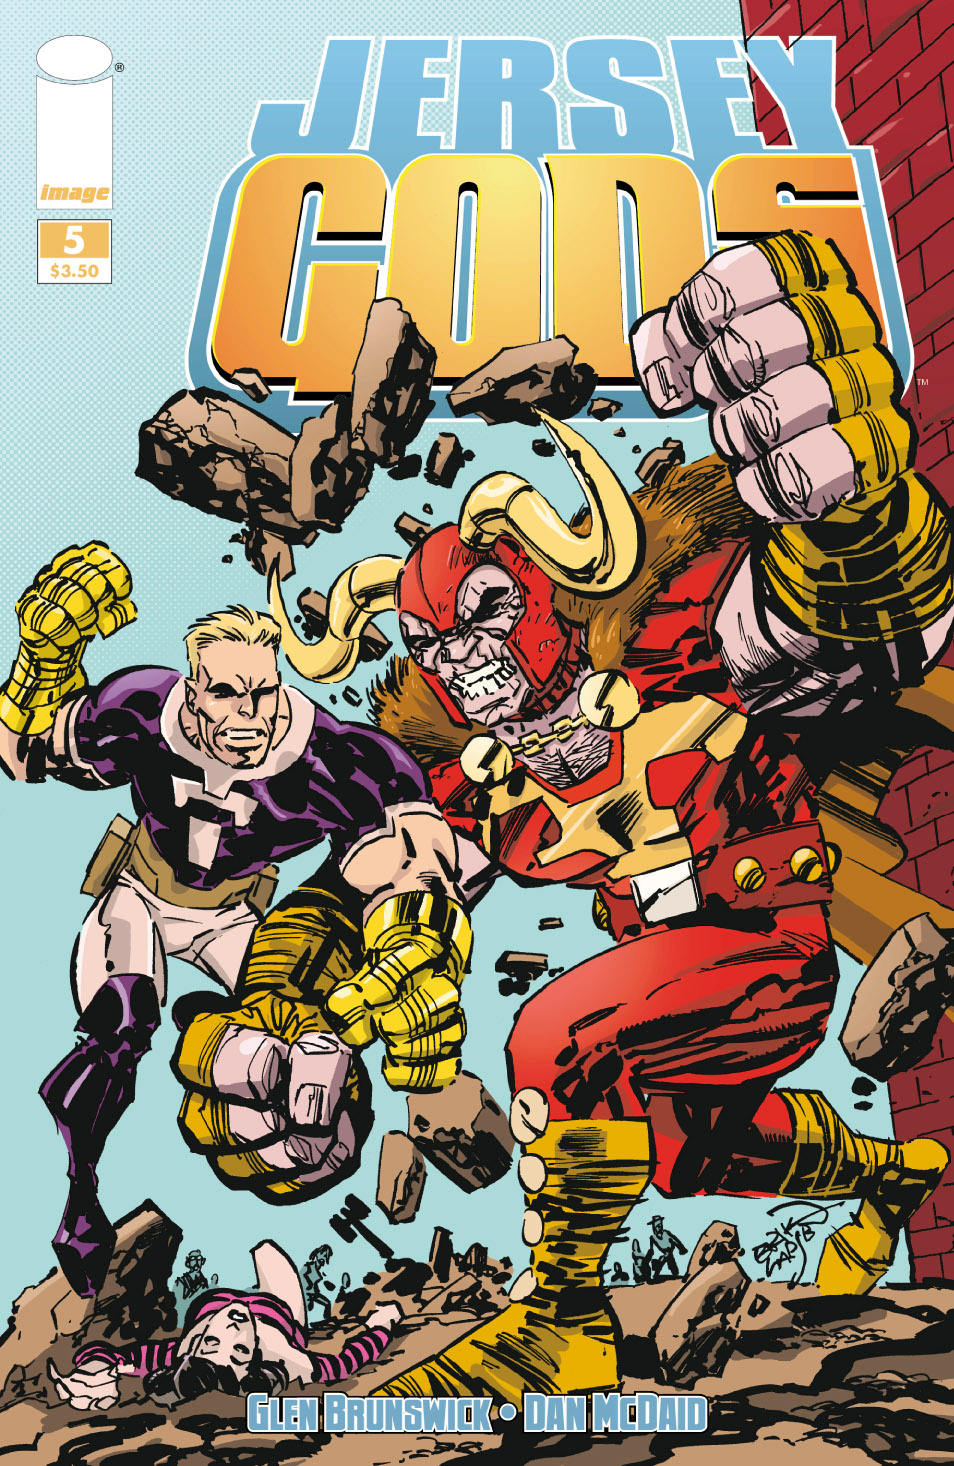 Read online Jersey Gods comic -  Issue #5 - 1